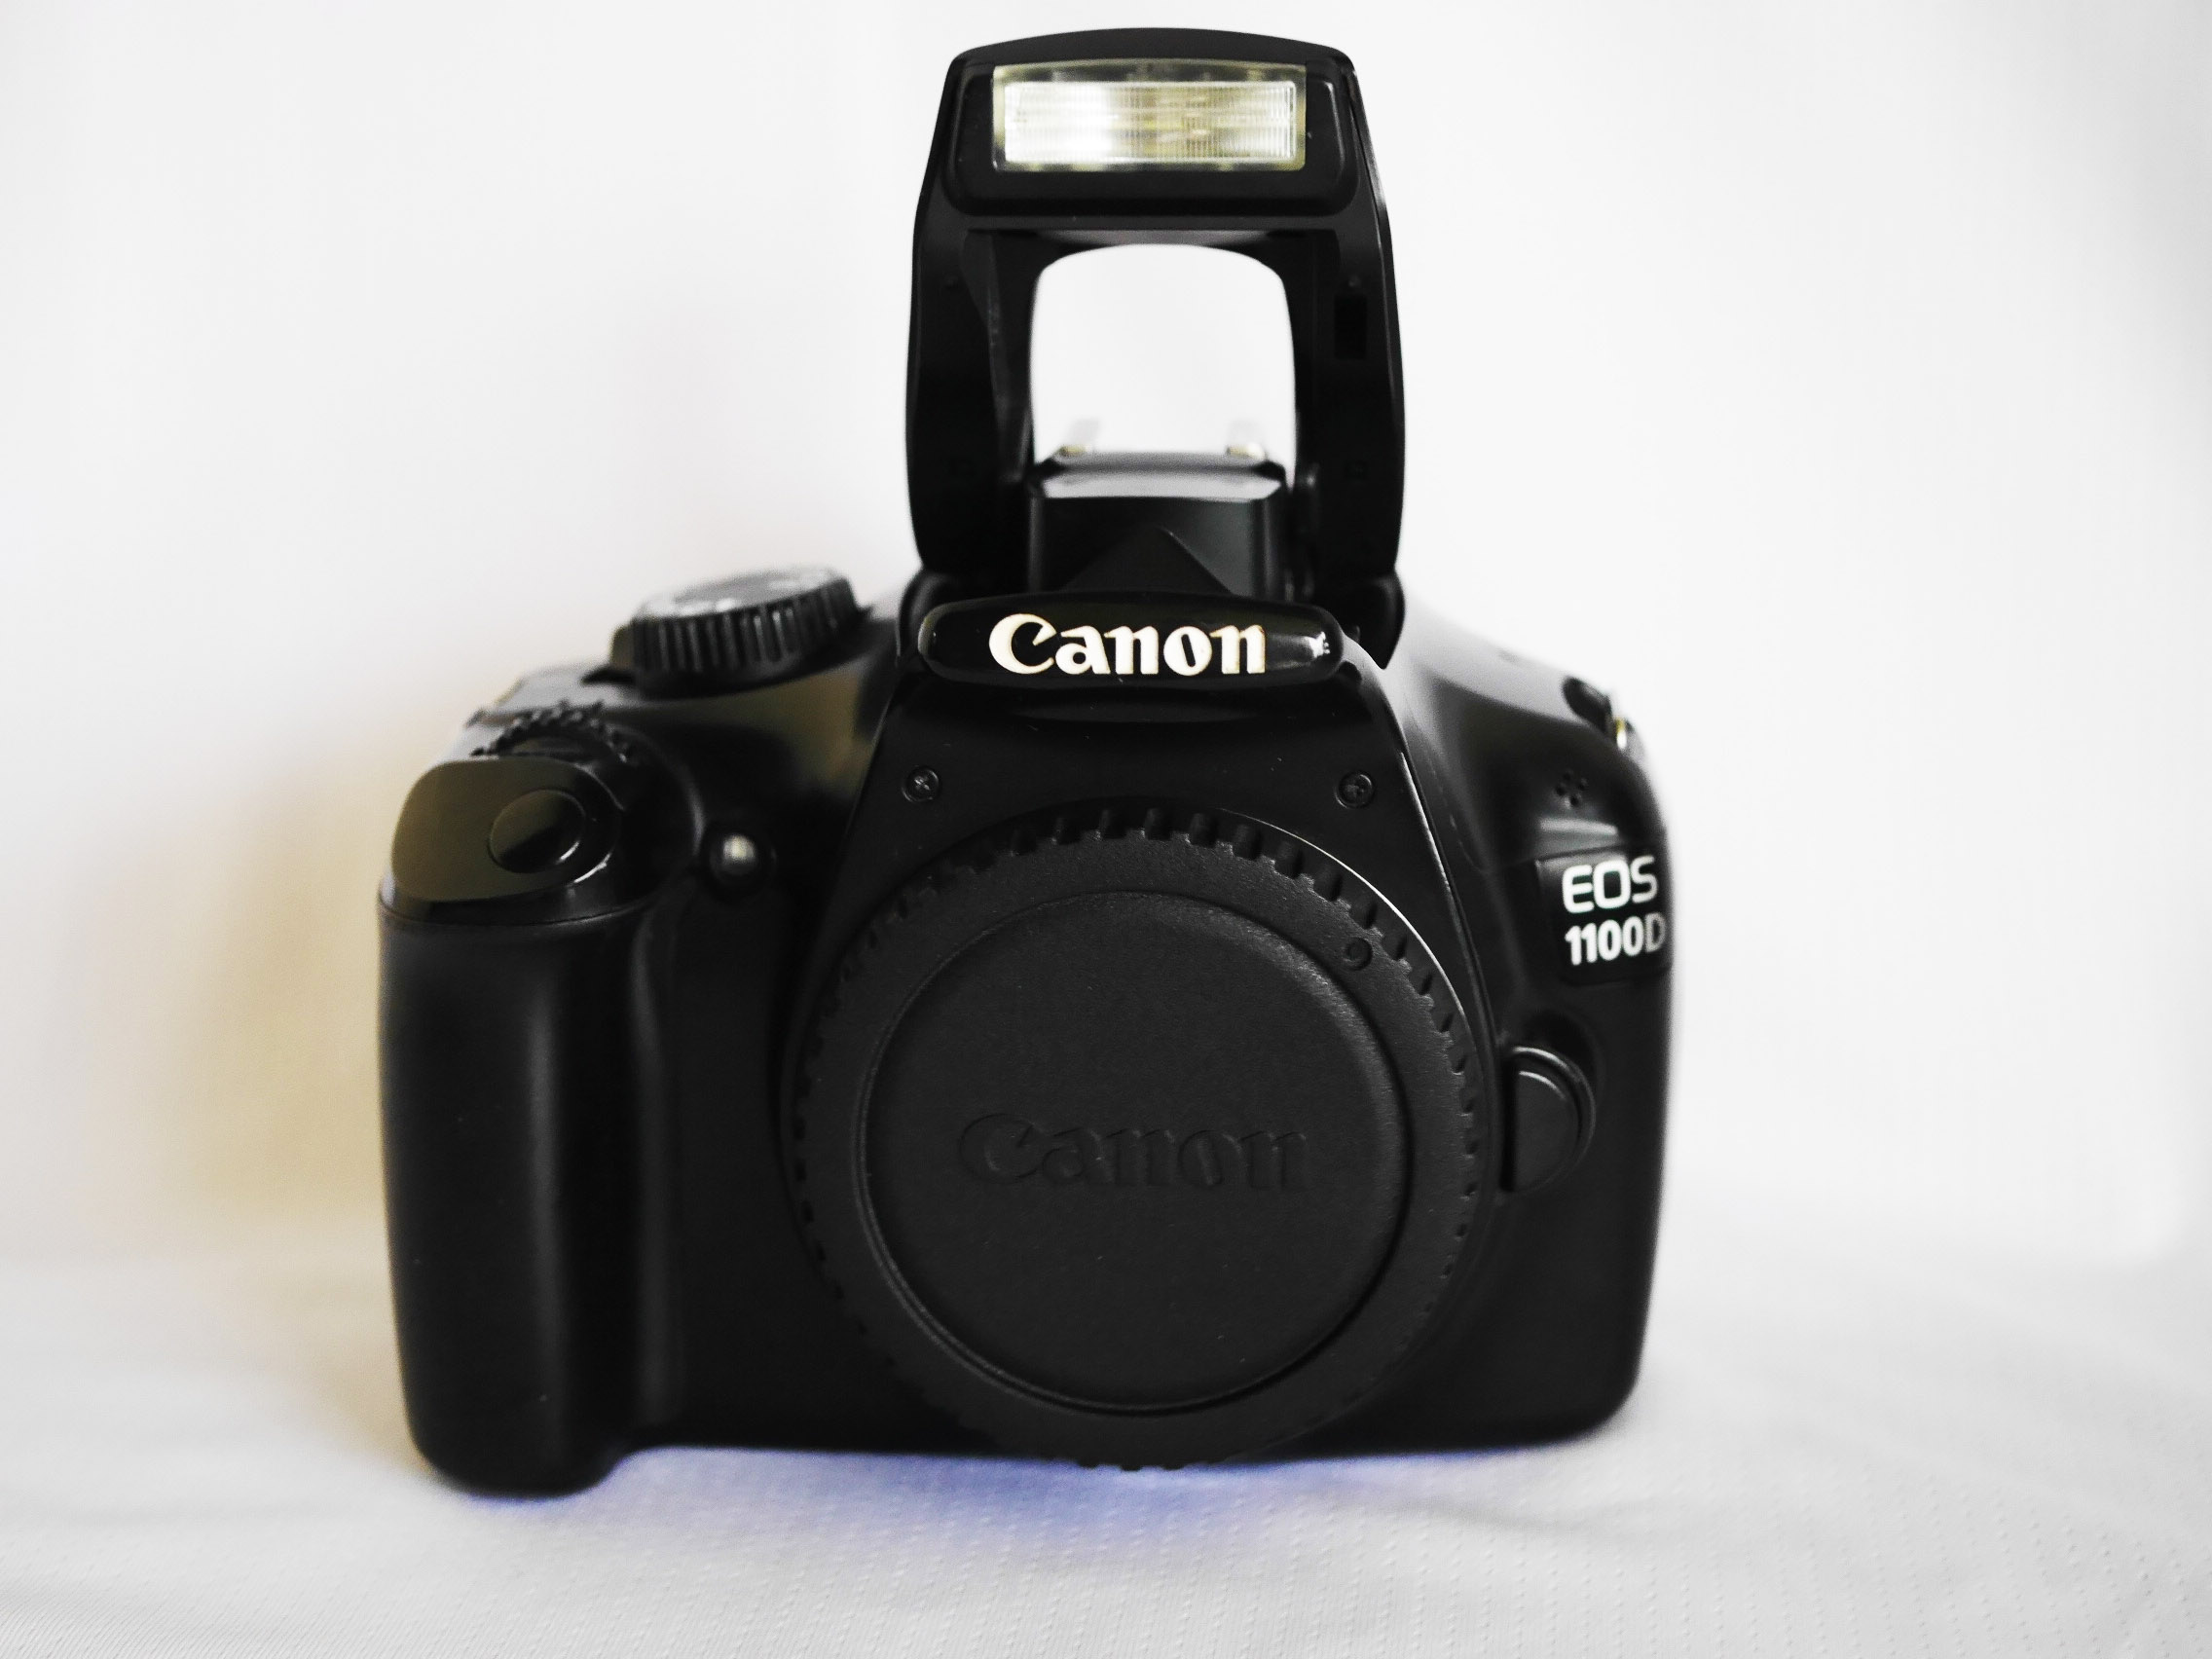 Canon EOS 1100D (Kiss X50 / Rebel T3) DSLR camera Black body only